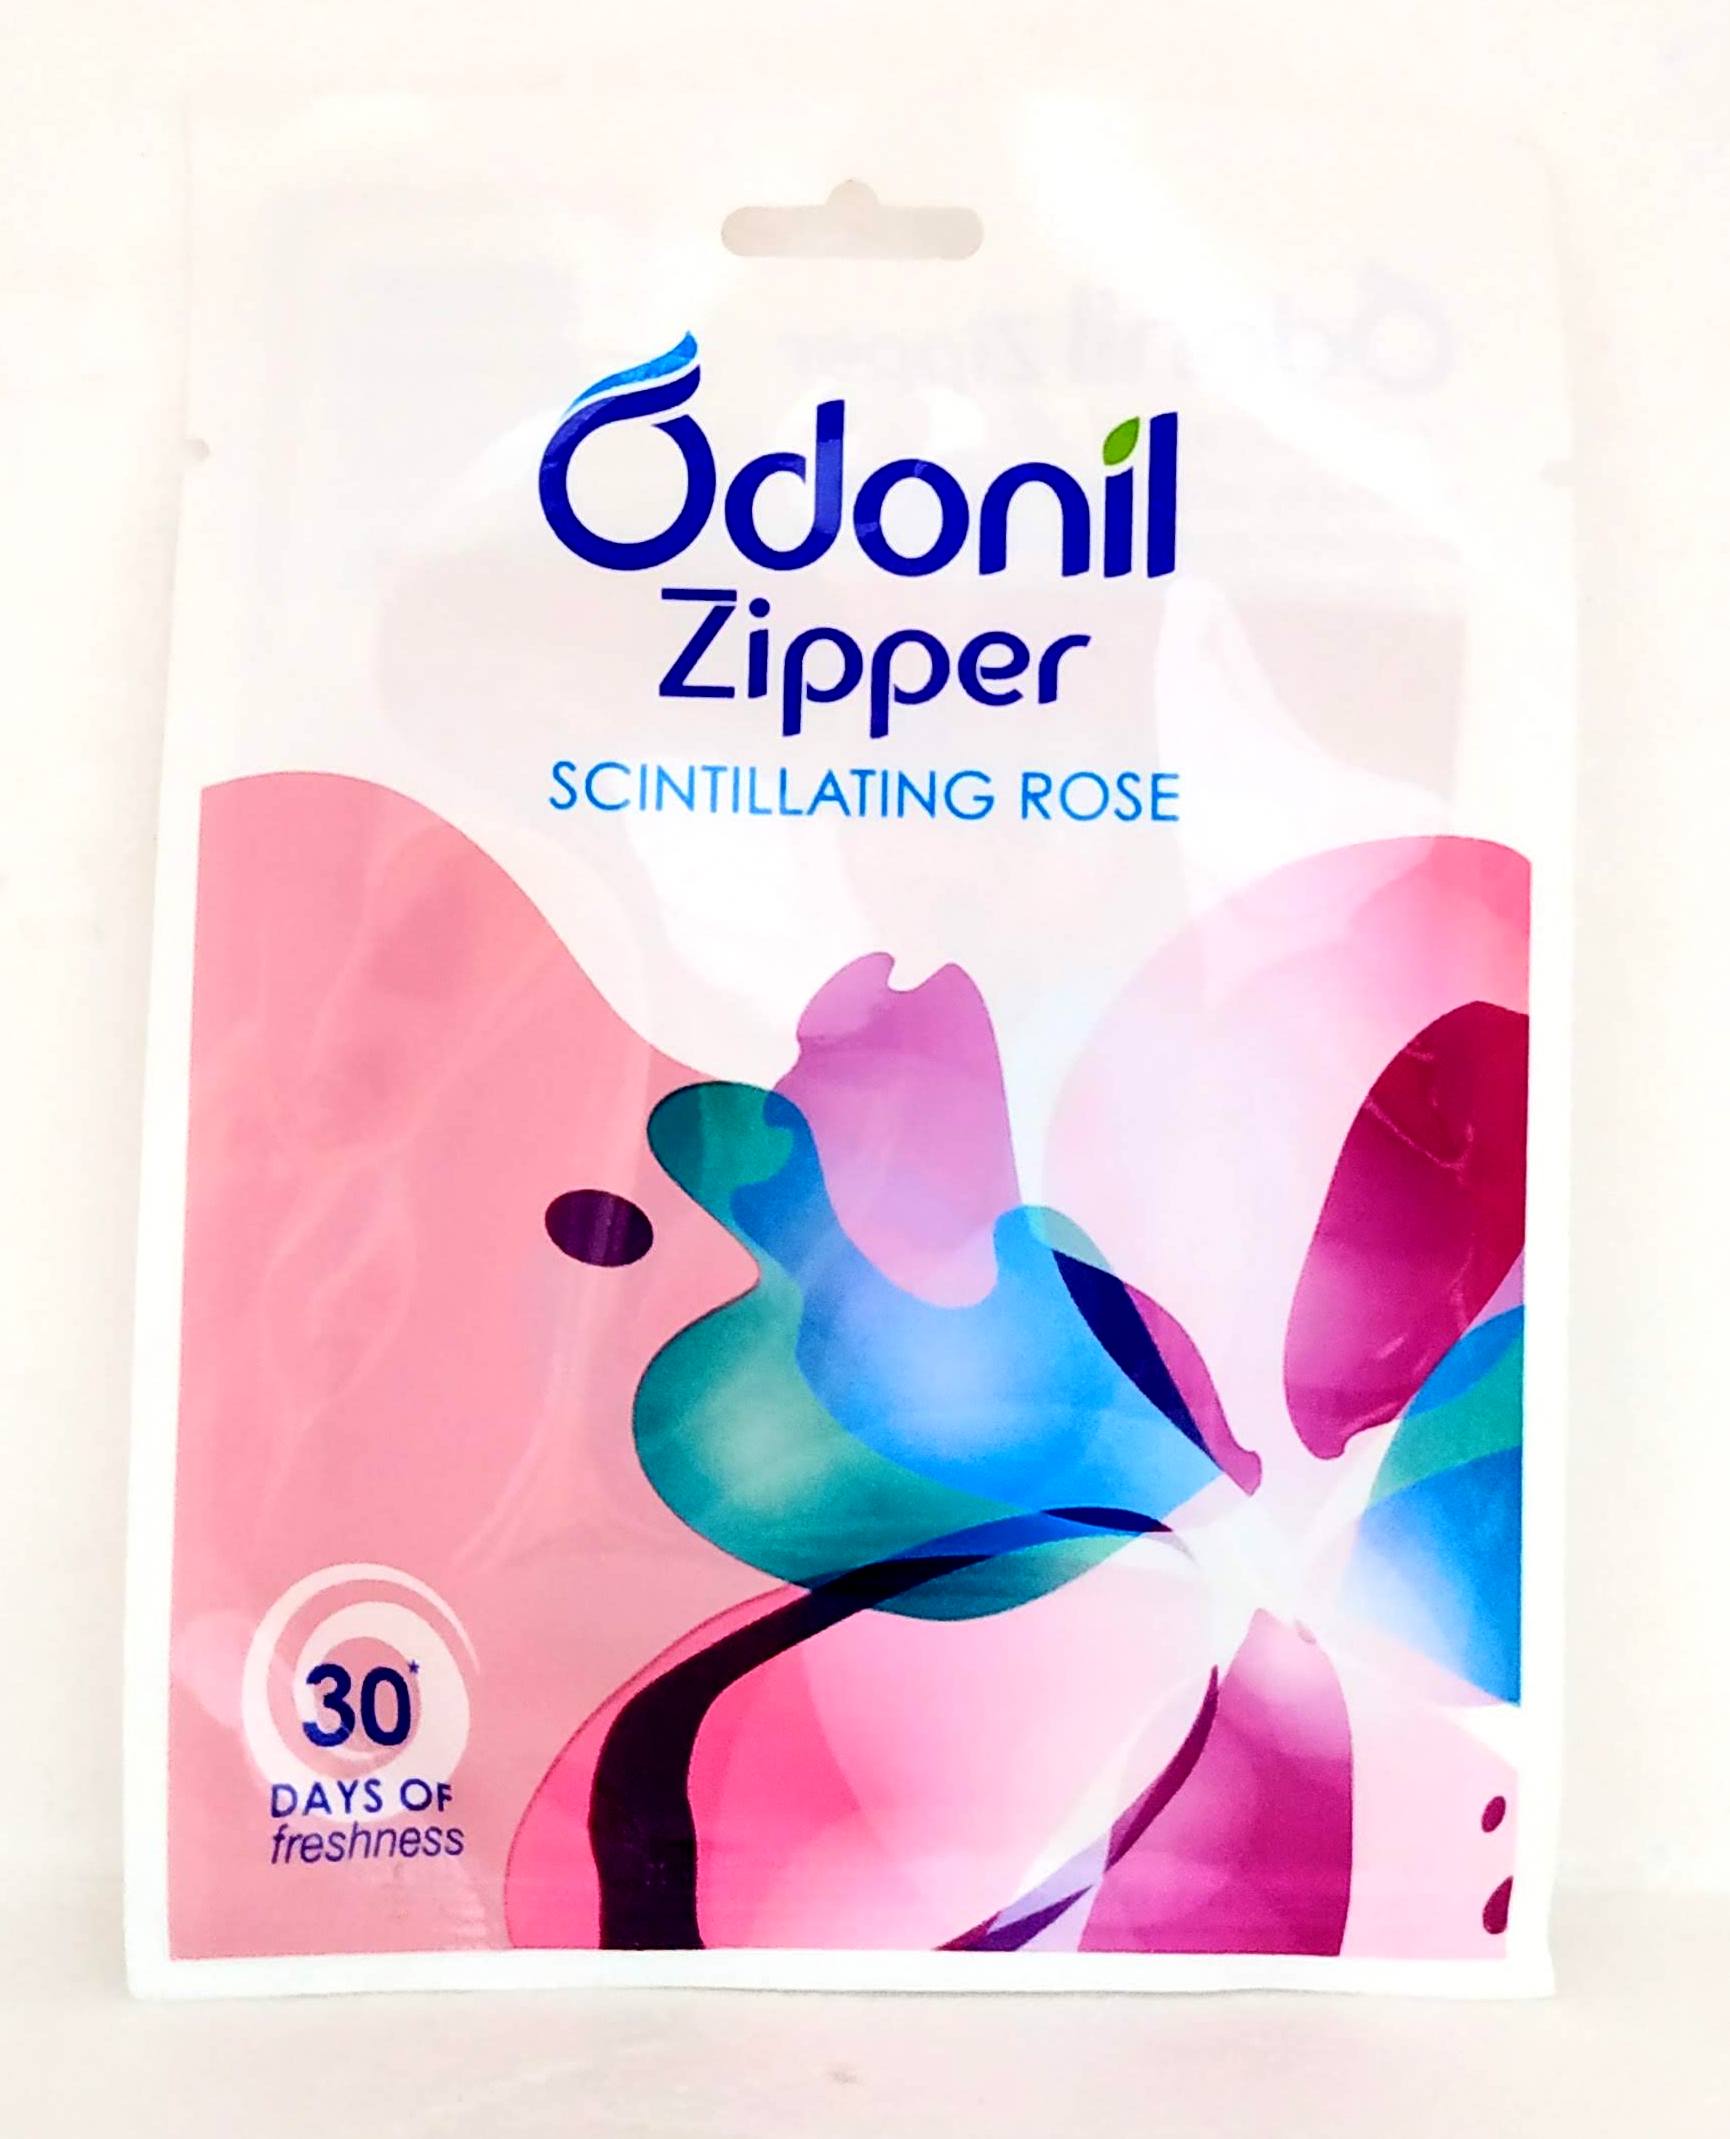 Shop Odonil Zipper - Scintillating Rose at price 55.00 from Dabur Online - Ayush Care